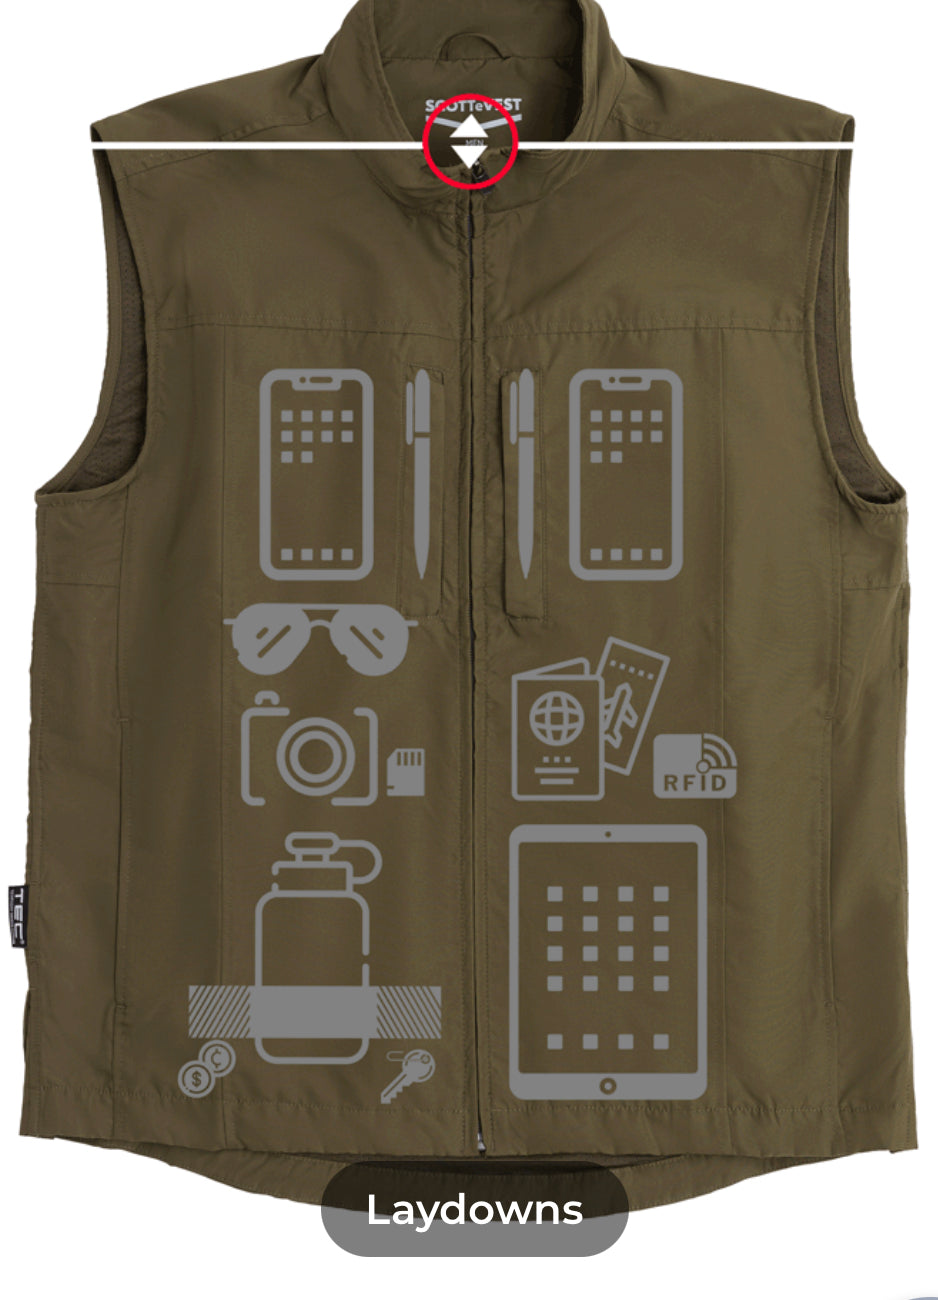 Scott e Vest RFID Water Repellant Travel Vest for Men (in black, size medium- last one in stock!)